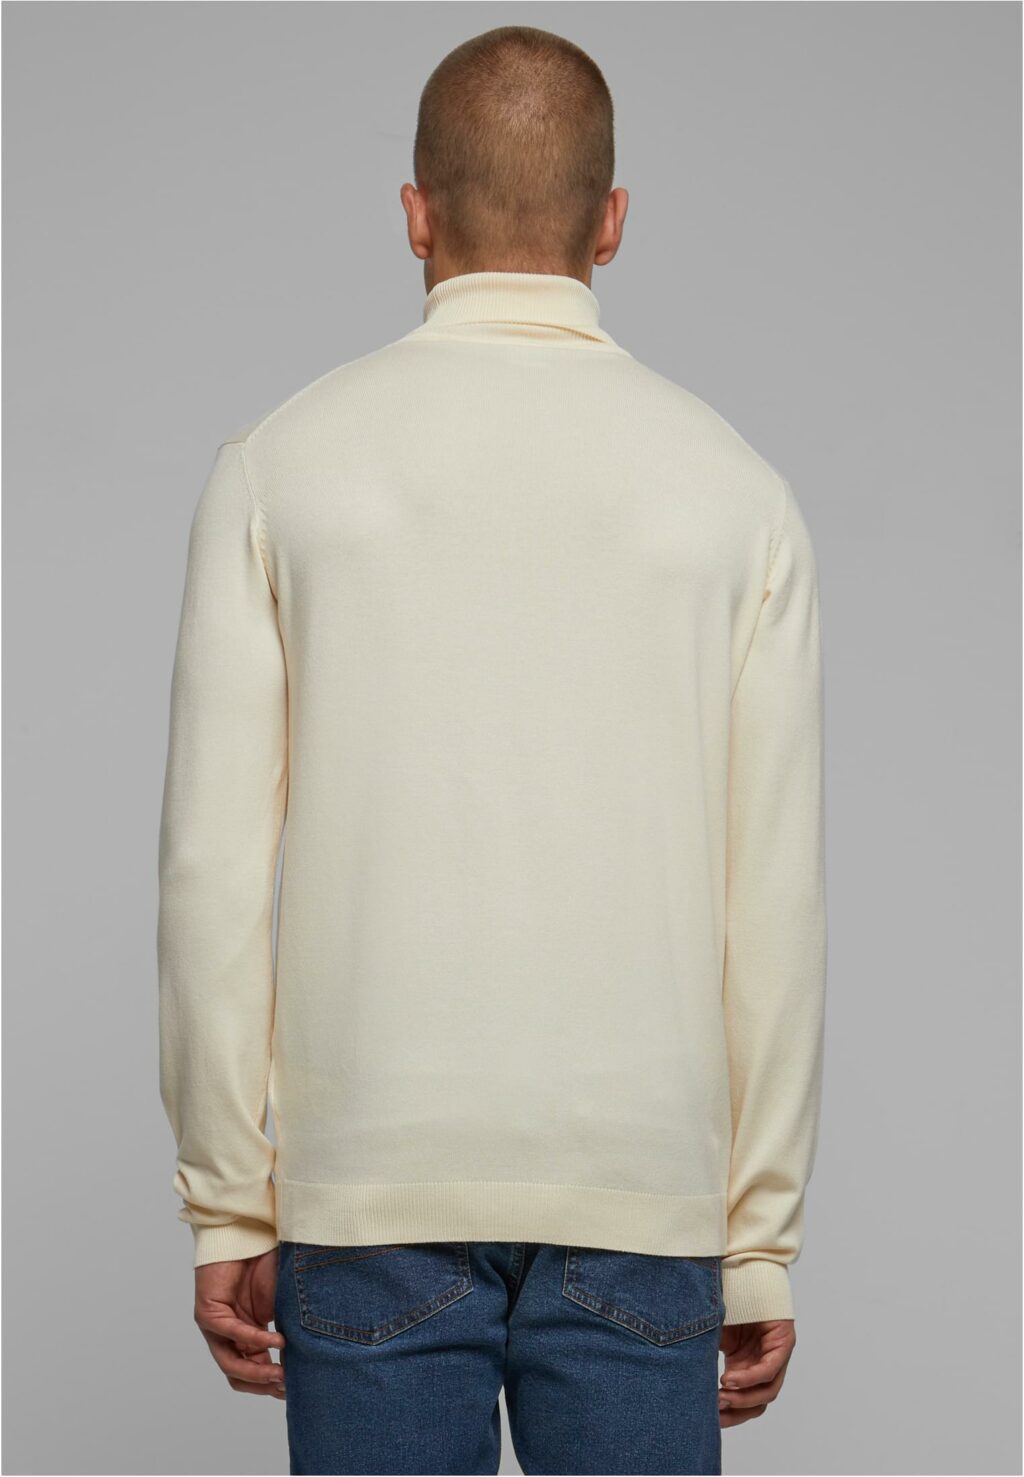 Urban Classics Knitted Turtleneck Sweater whitesand TB6360